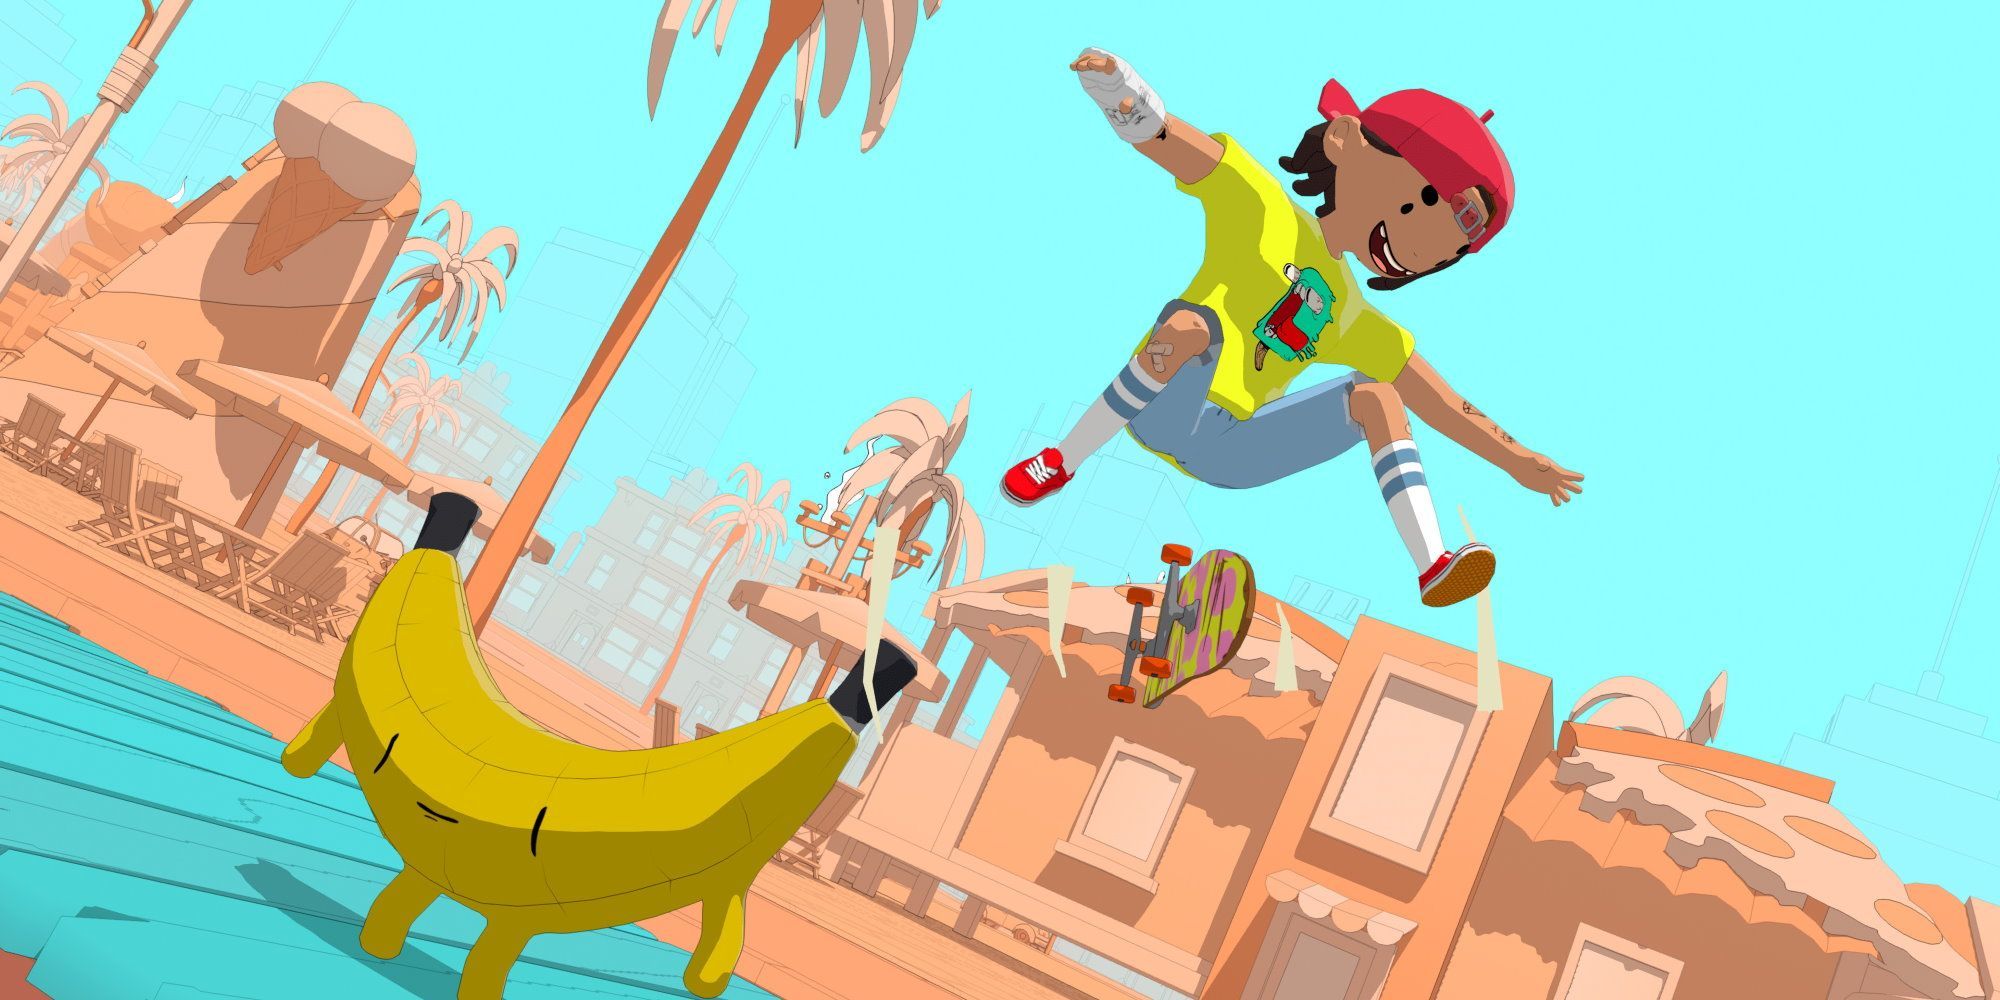 Jumping over a banana guy in OlliOlli World